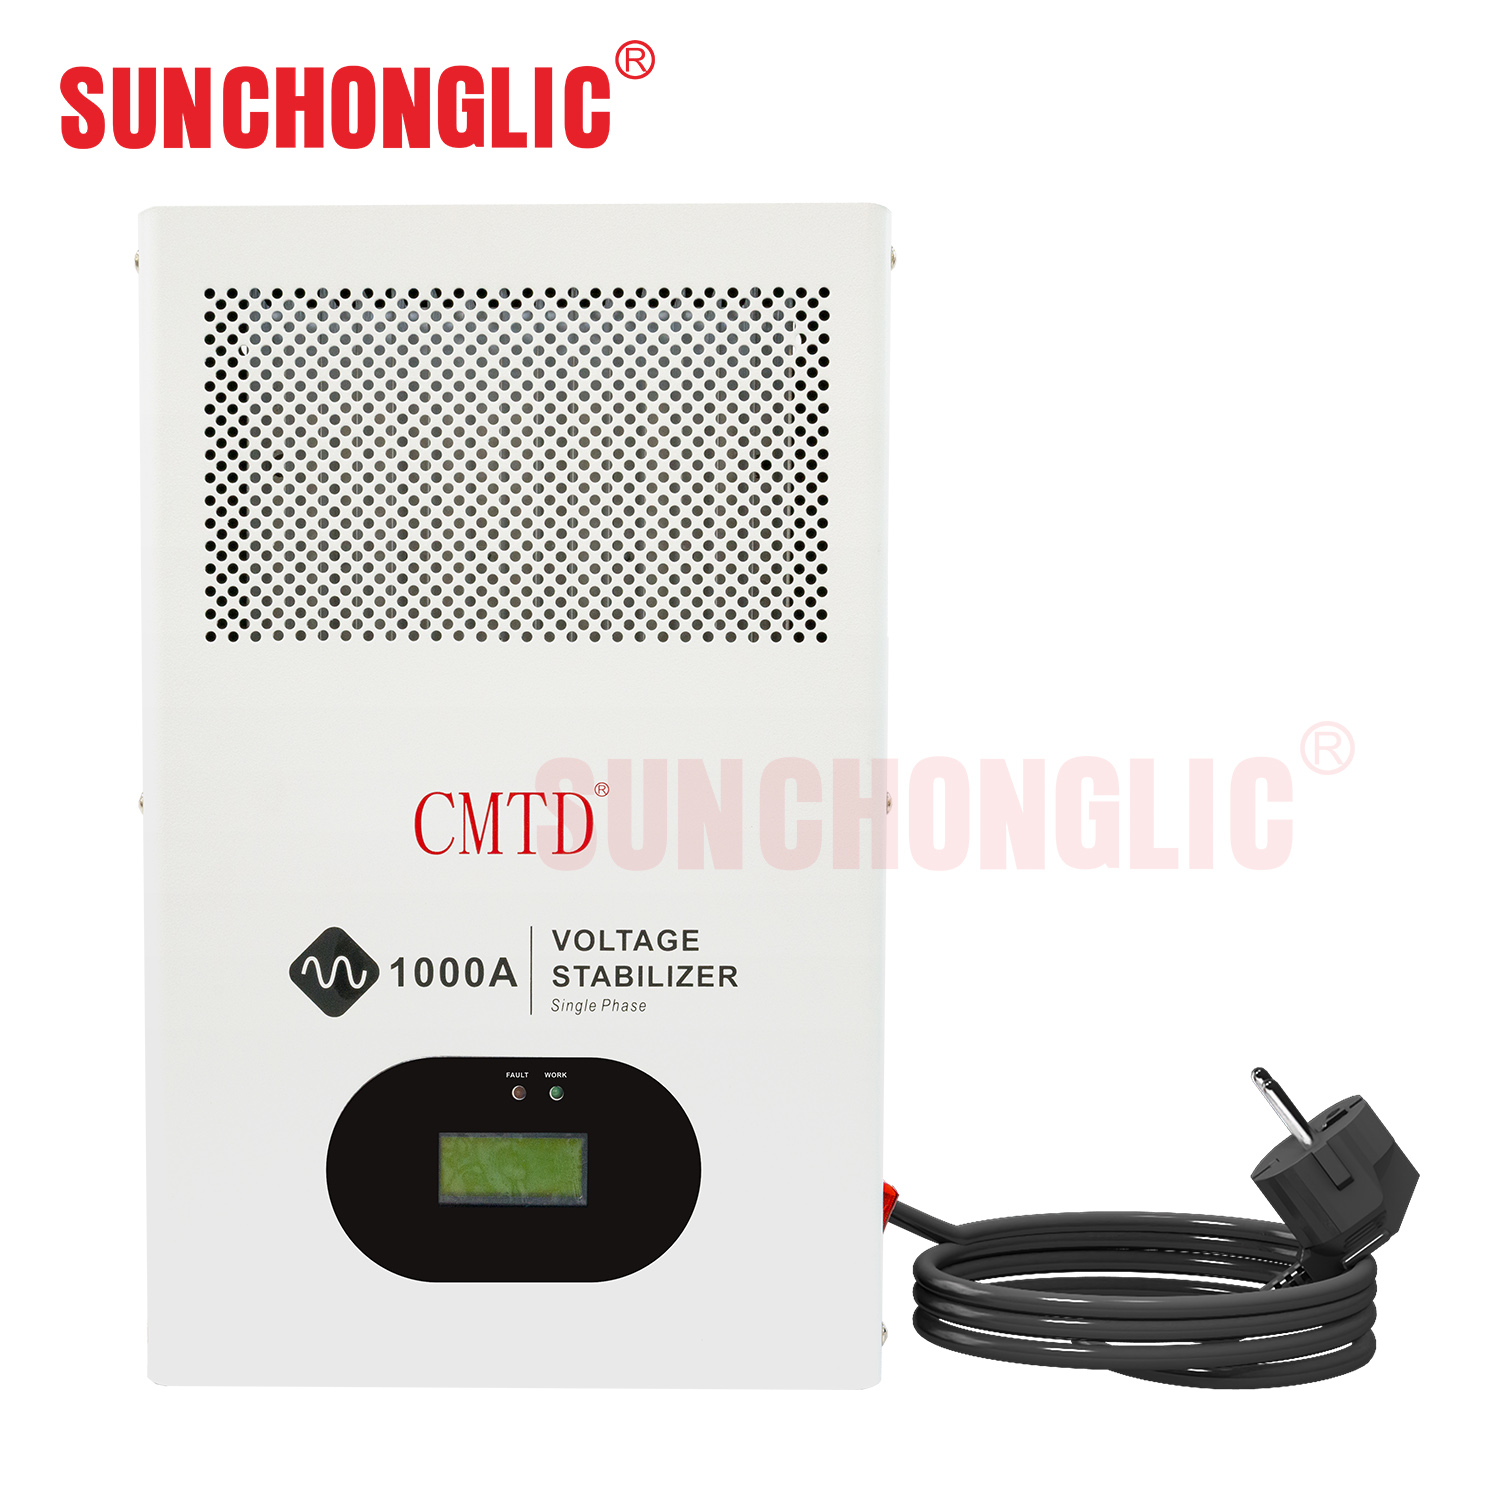 Sunchonglic 1000w 220v AC AC regulator voltage stabilizer voltage